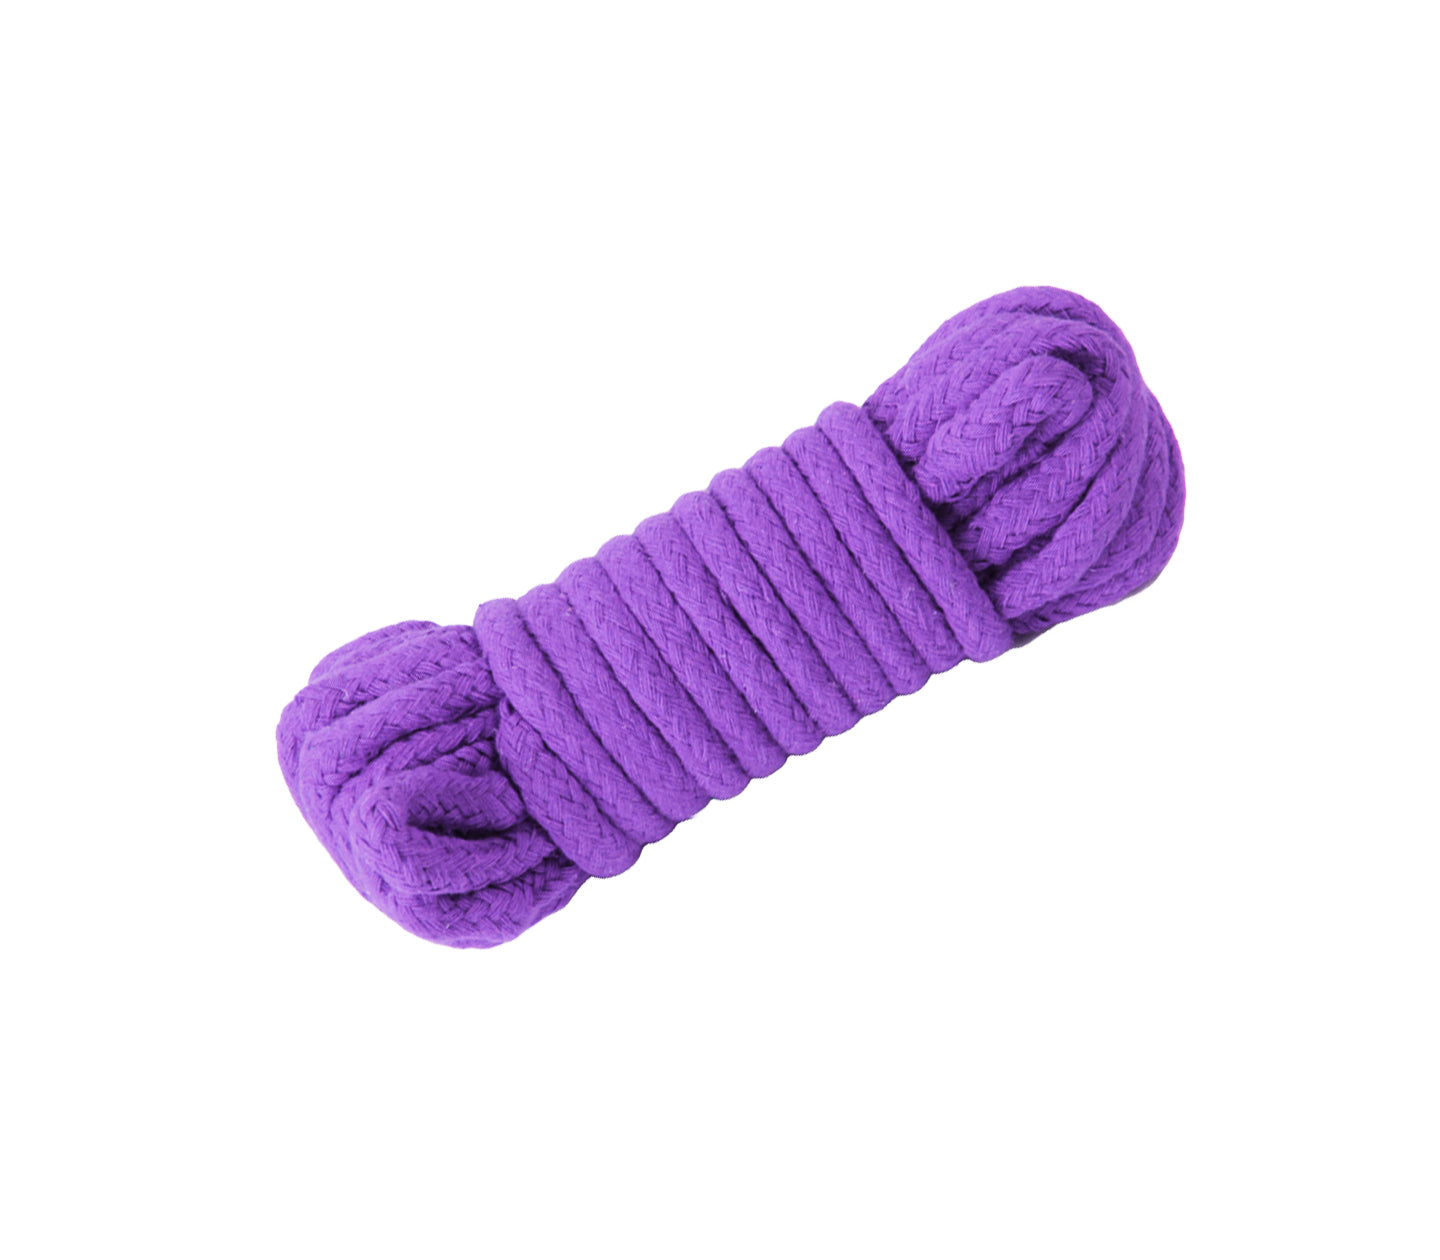 Rop001 10M Cotton Bondage Rope Purple - Club X